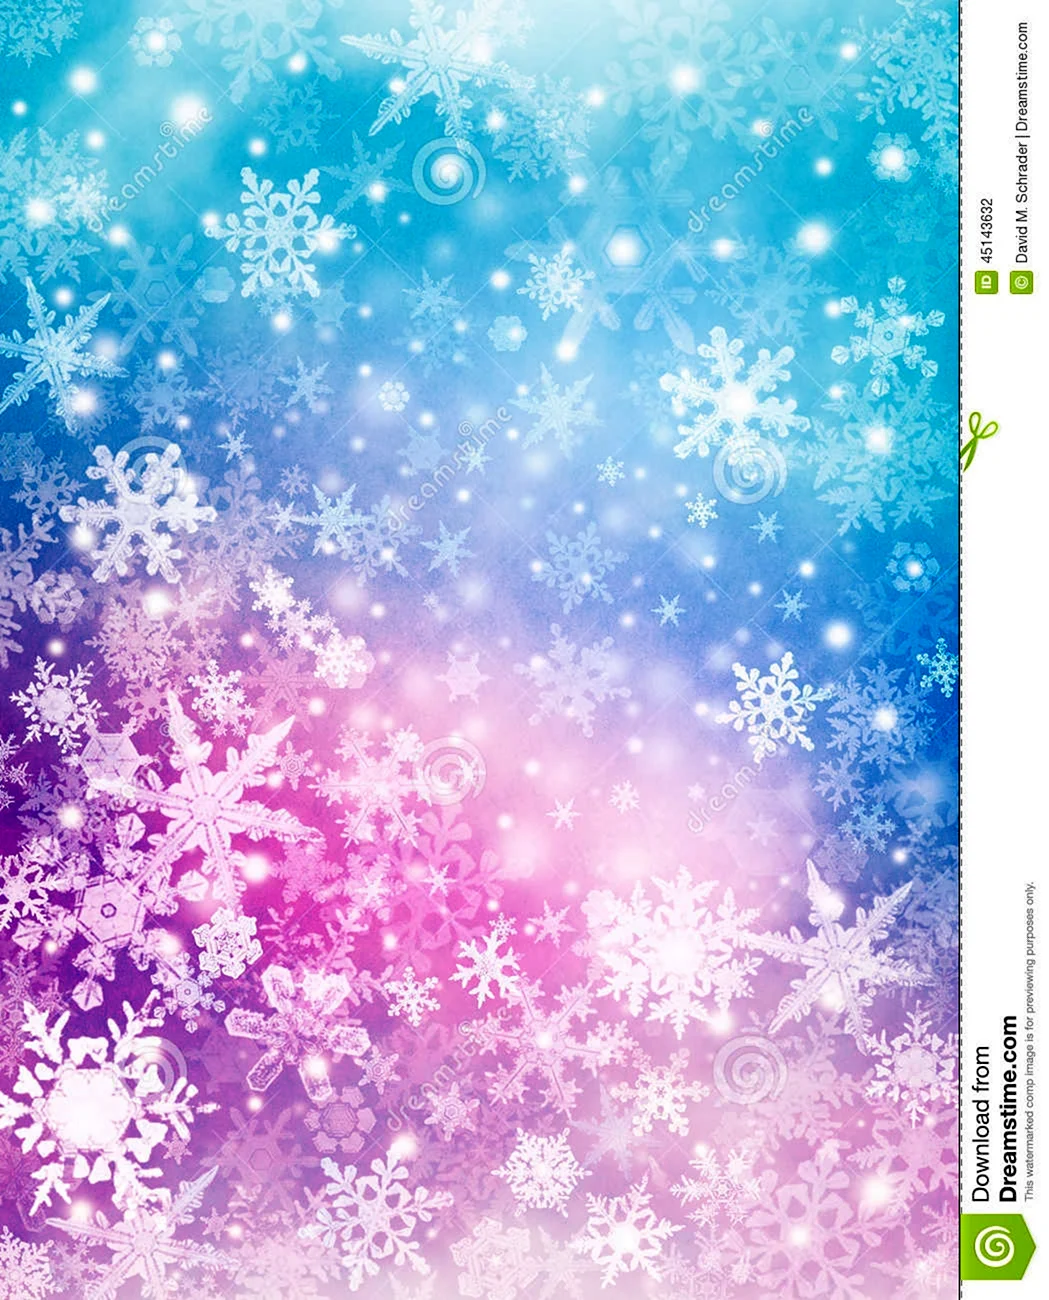 Розово голубой фон со снежинками